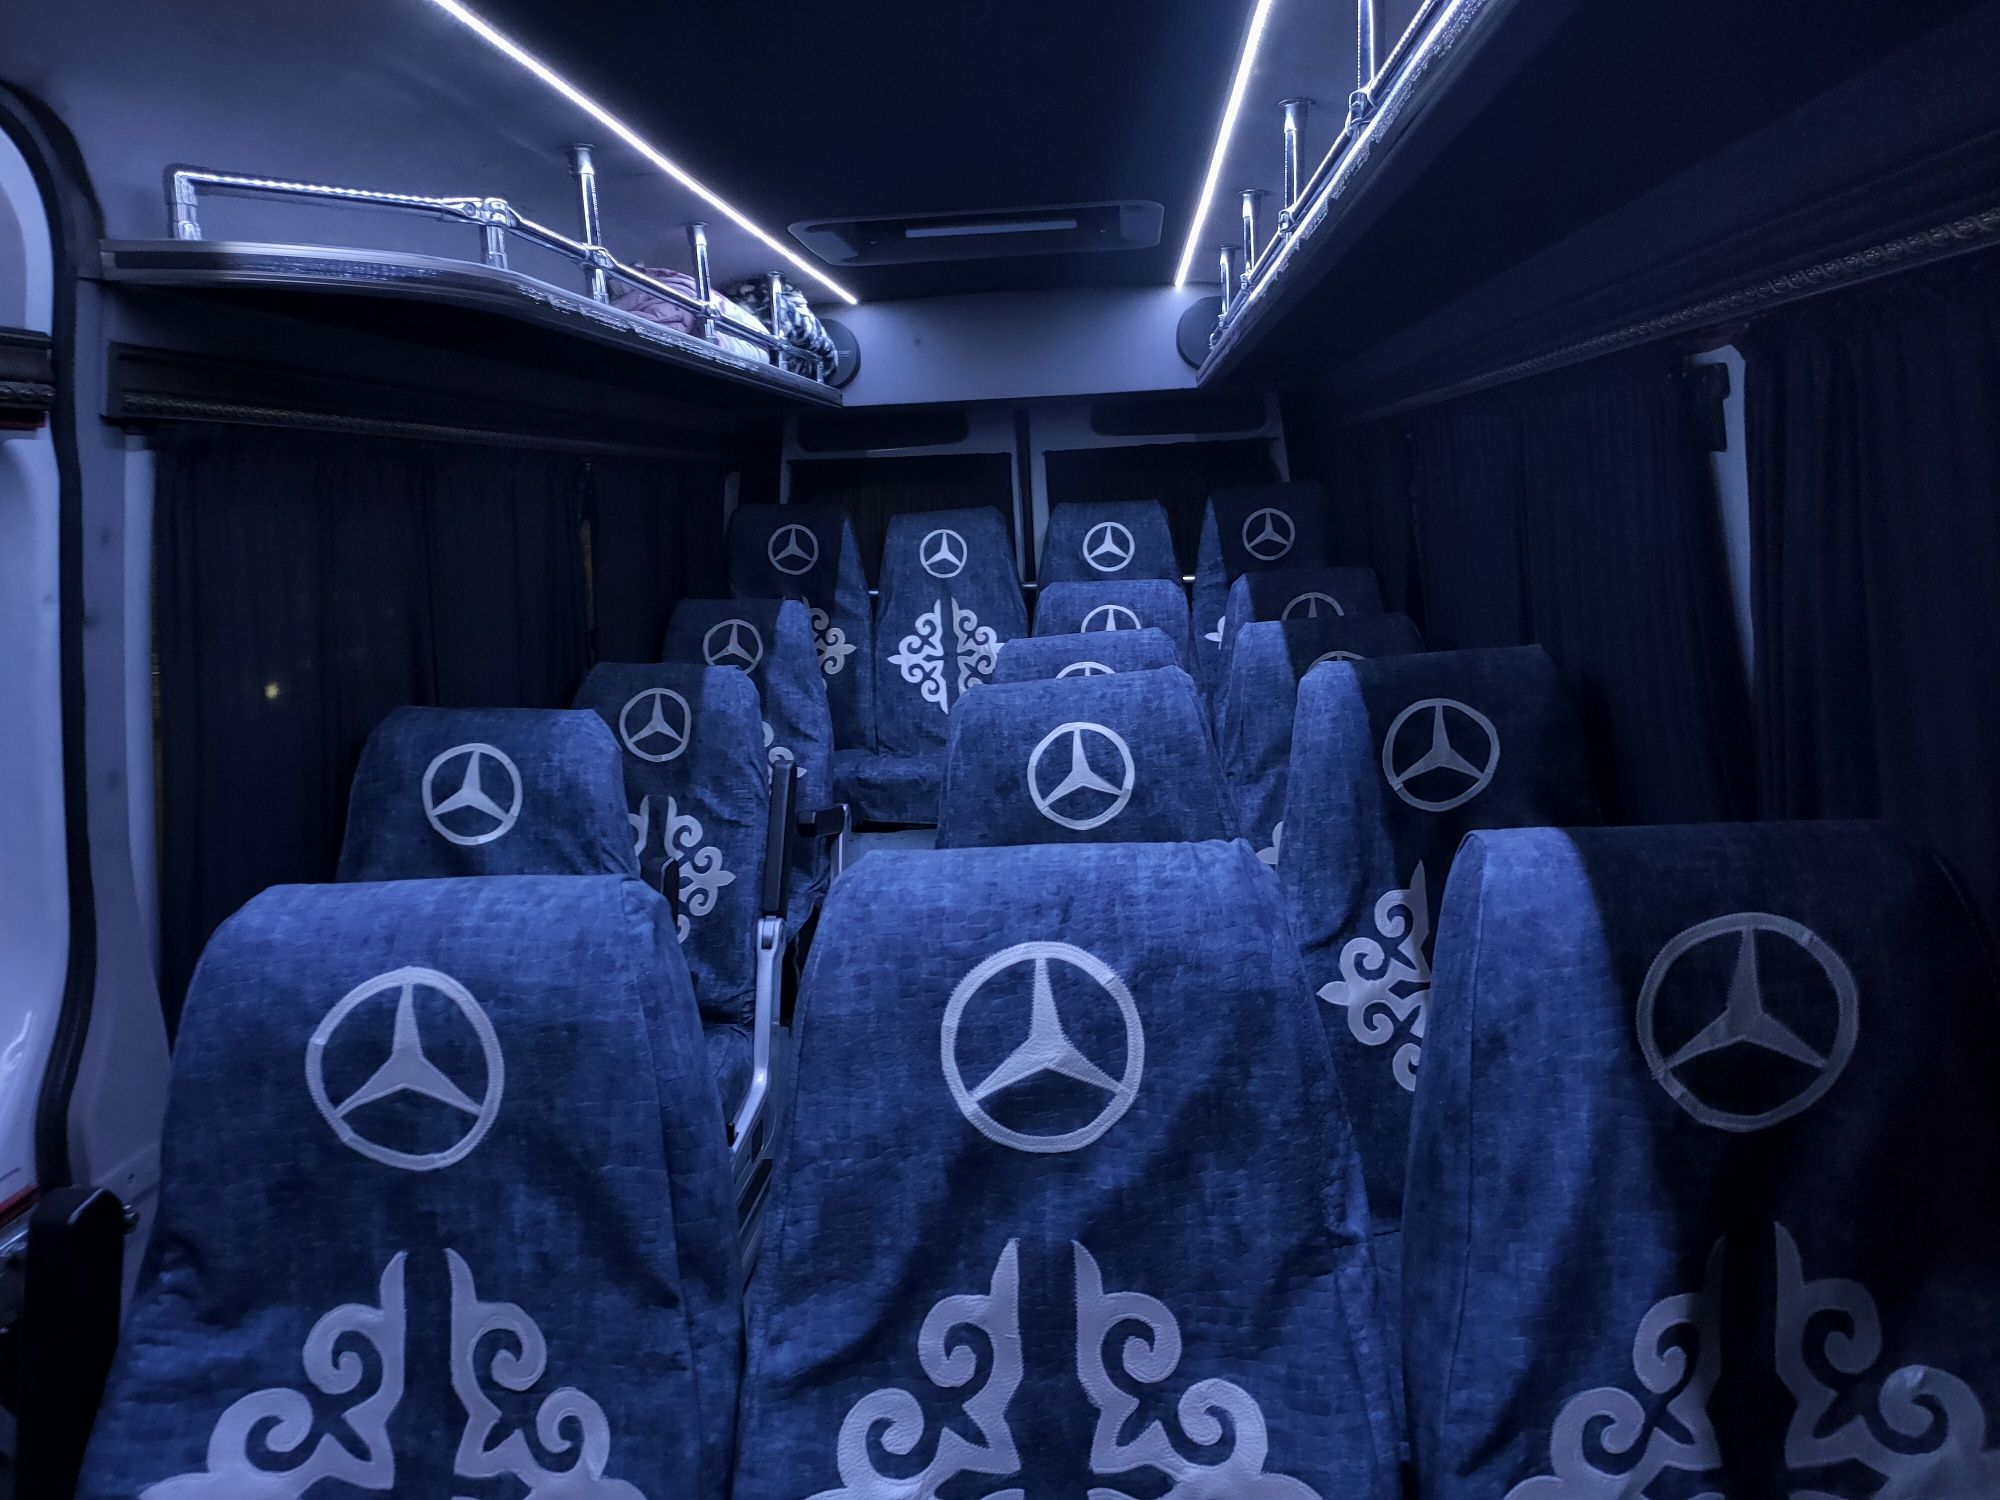 Услуги микроавтобуса Mercedes Benz Sprinter 18 мест